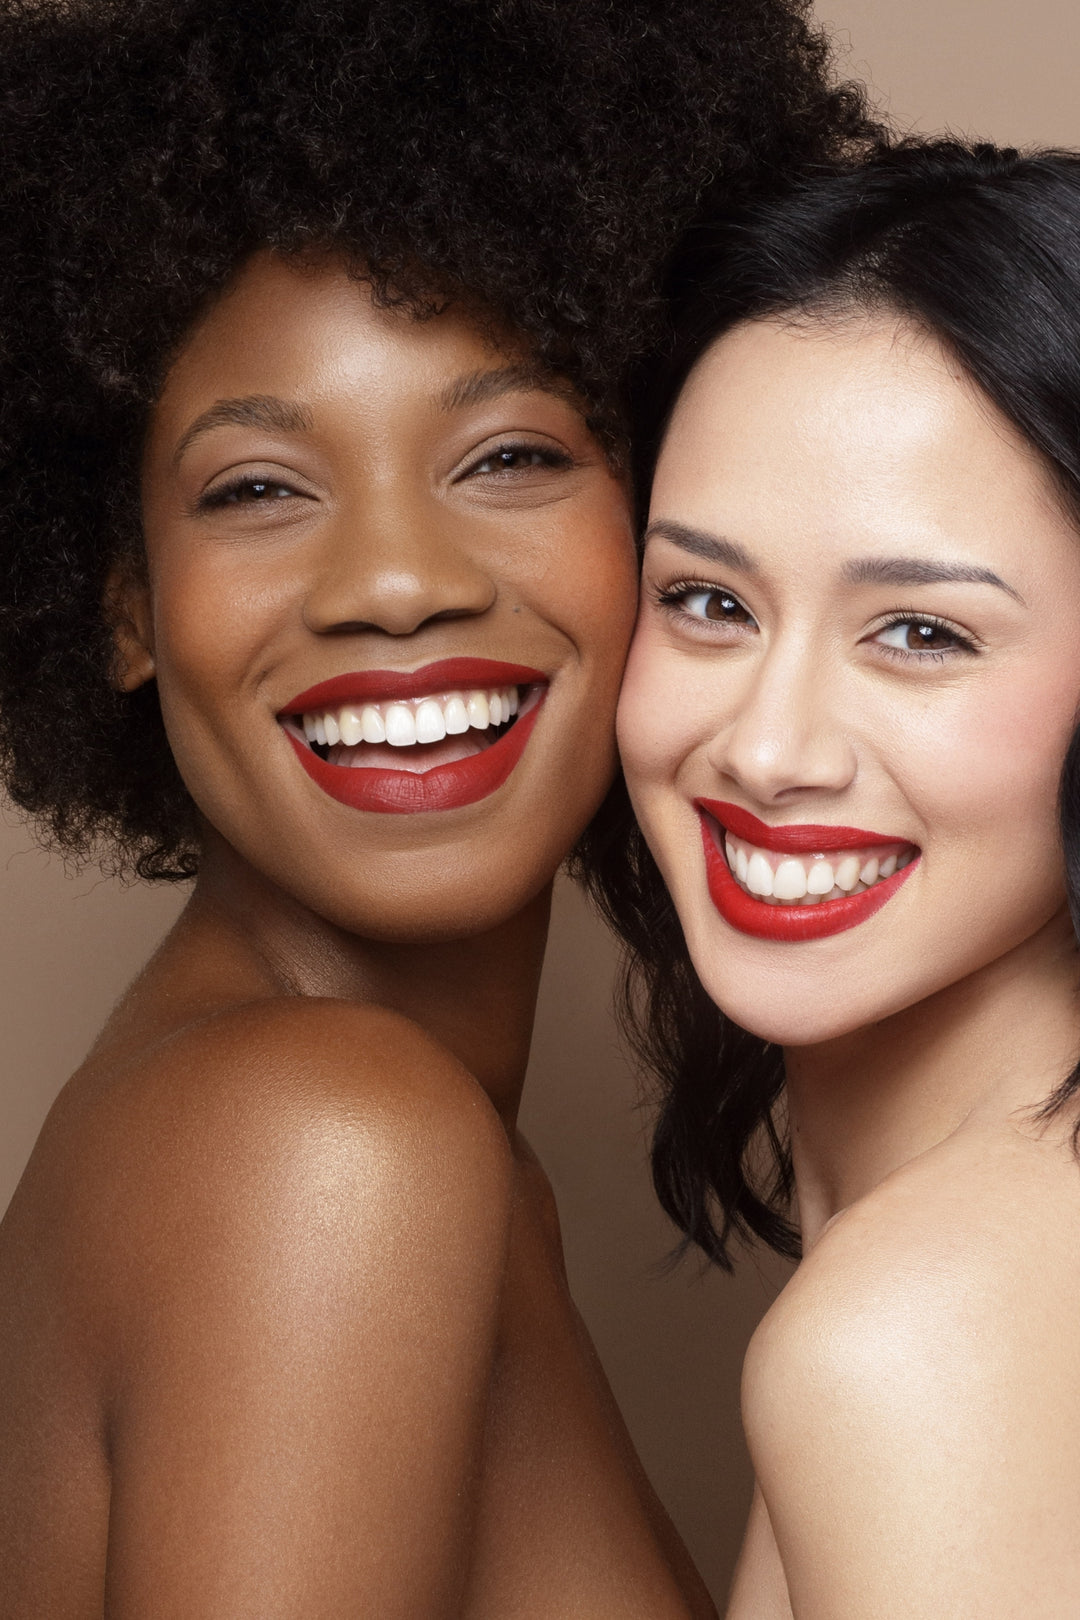 Pro Makeup Brush Set – Poise Makeup Professional